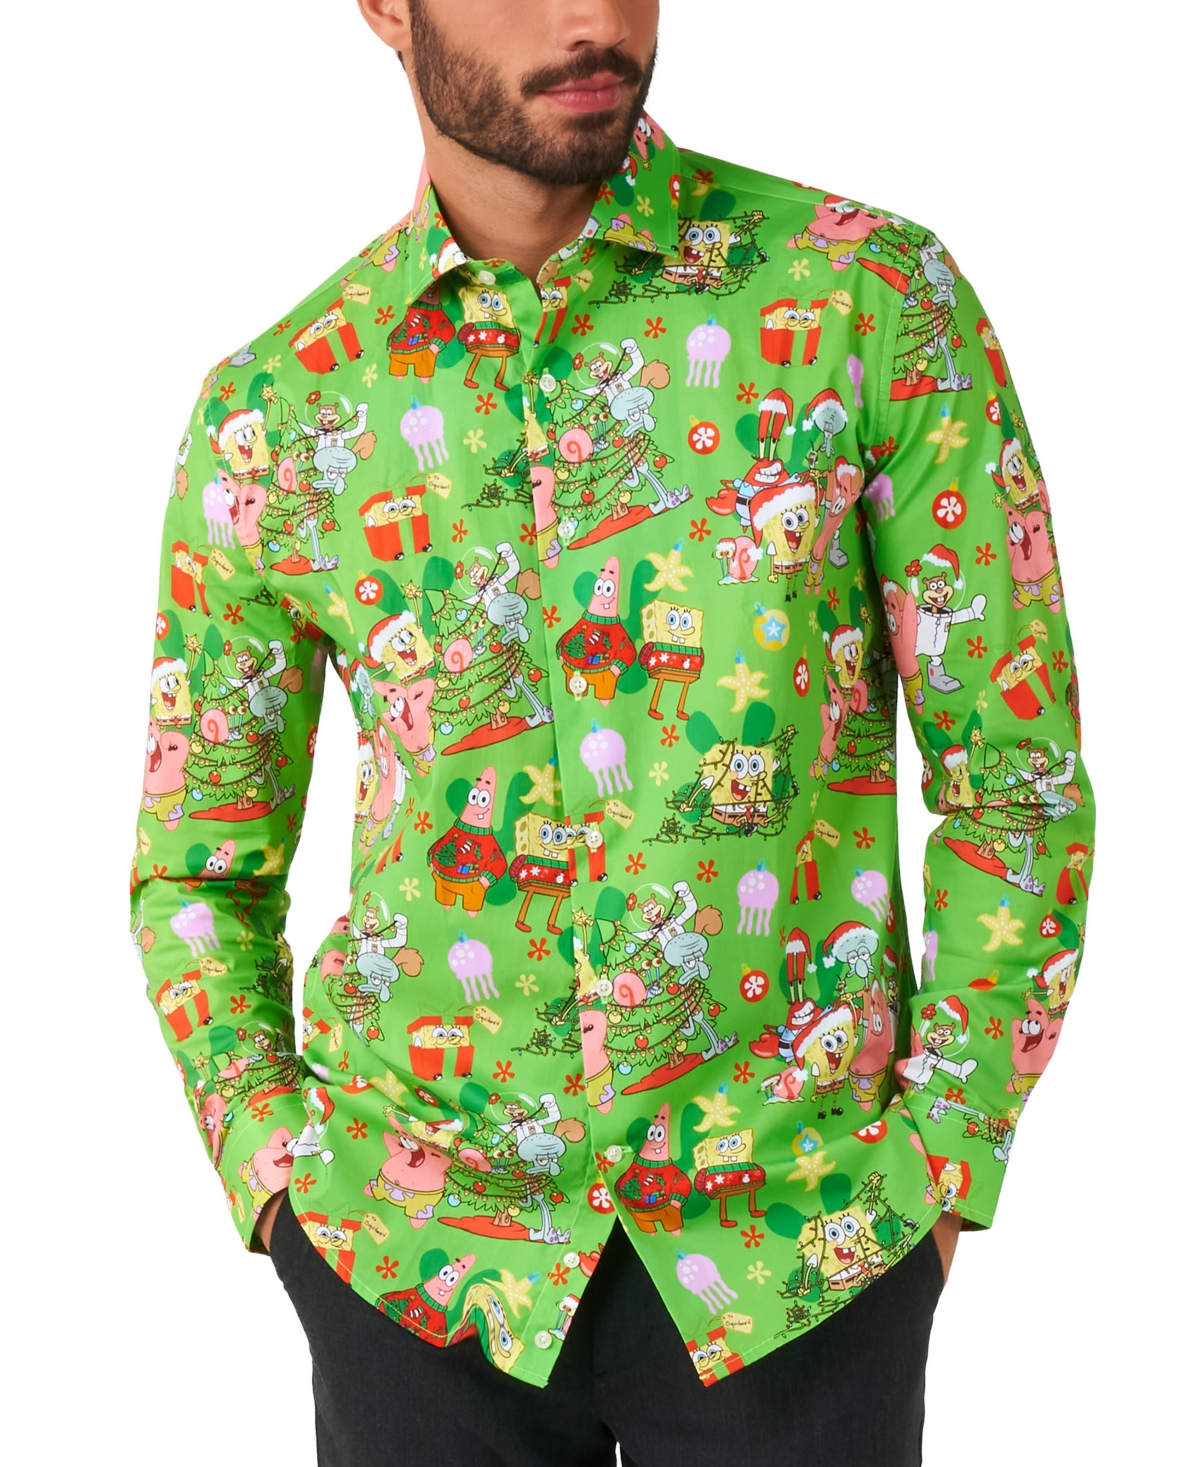 Men's Tailored-Fit SpongeBob SquarePants Holiday Printed Shirt - Green